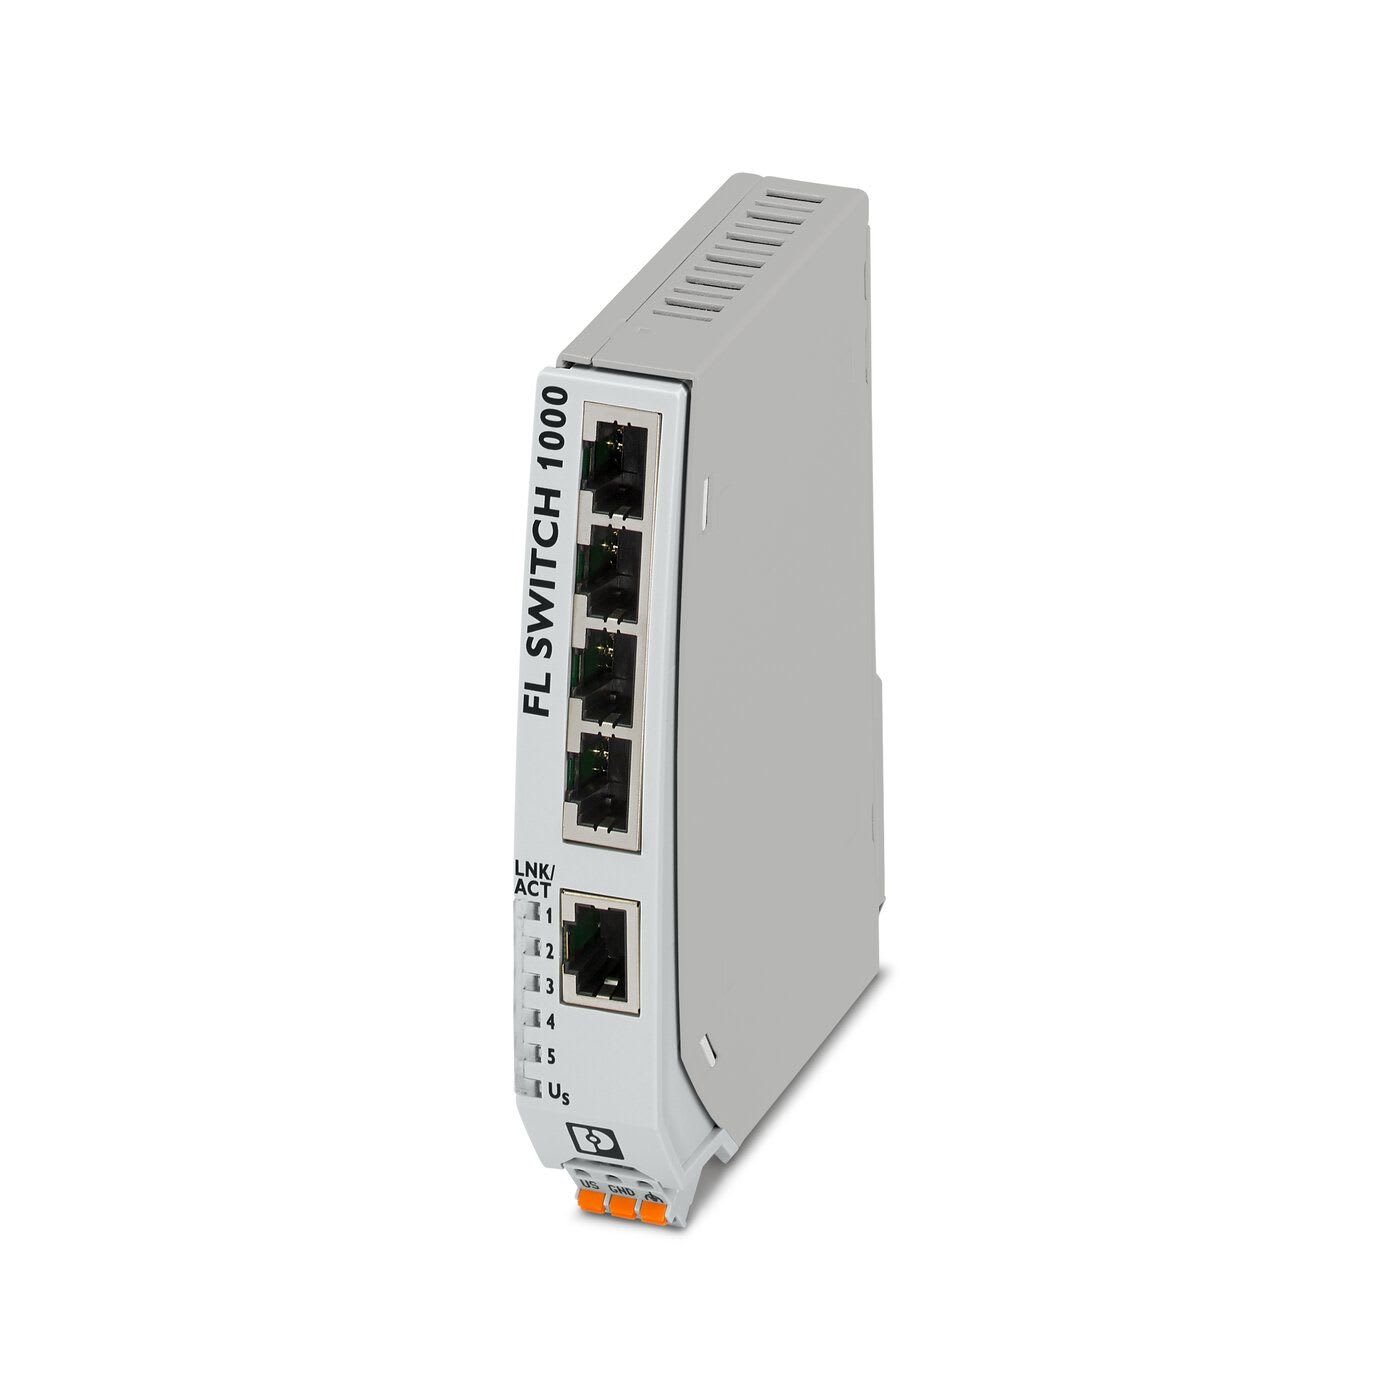 Phoenix Contact - Ethernet Industriel-Switch-